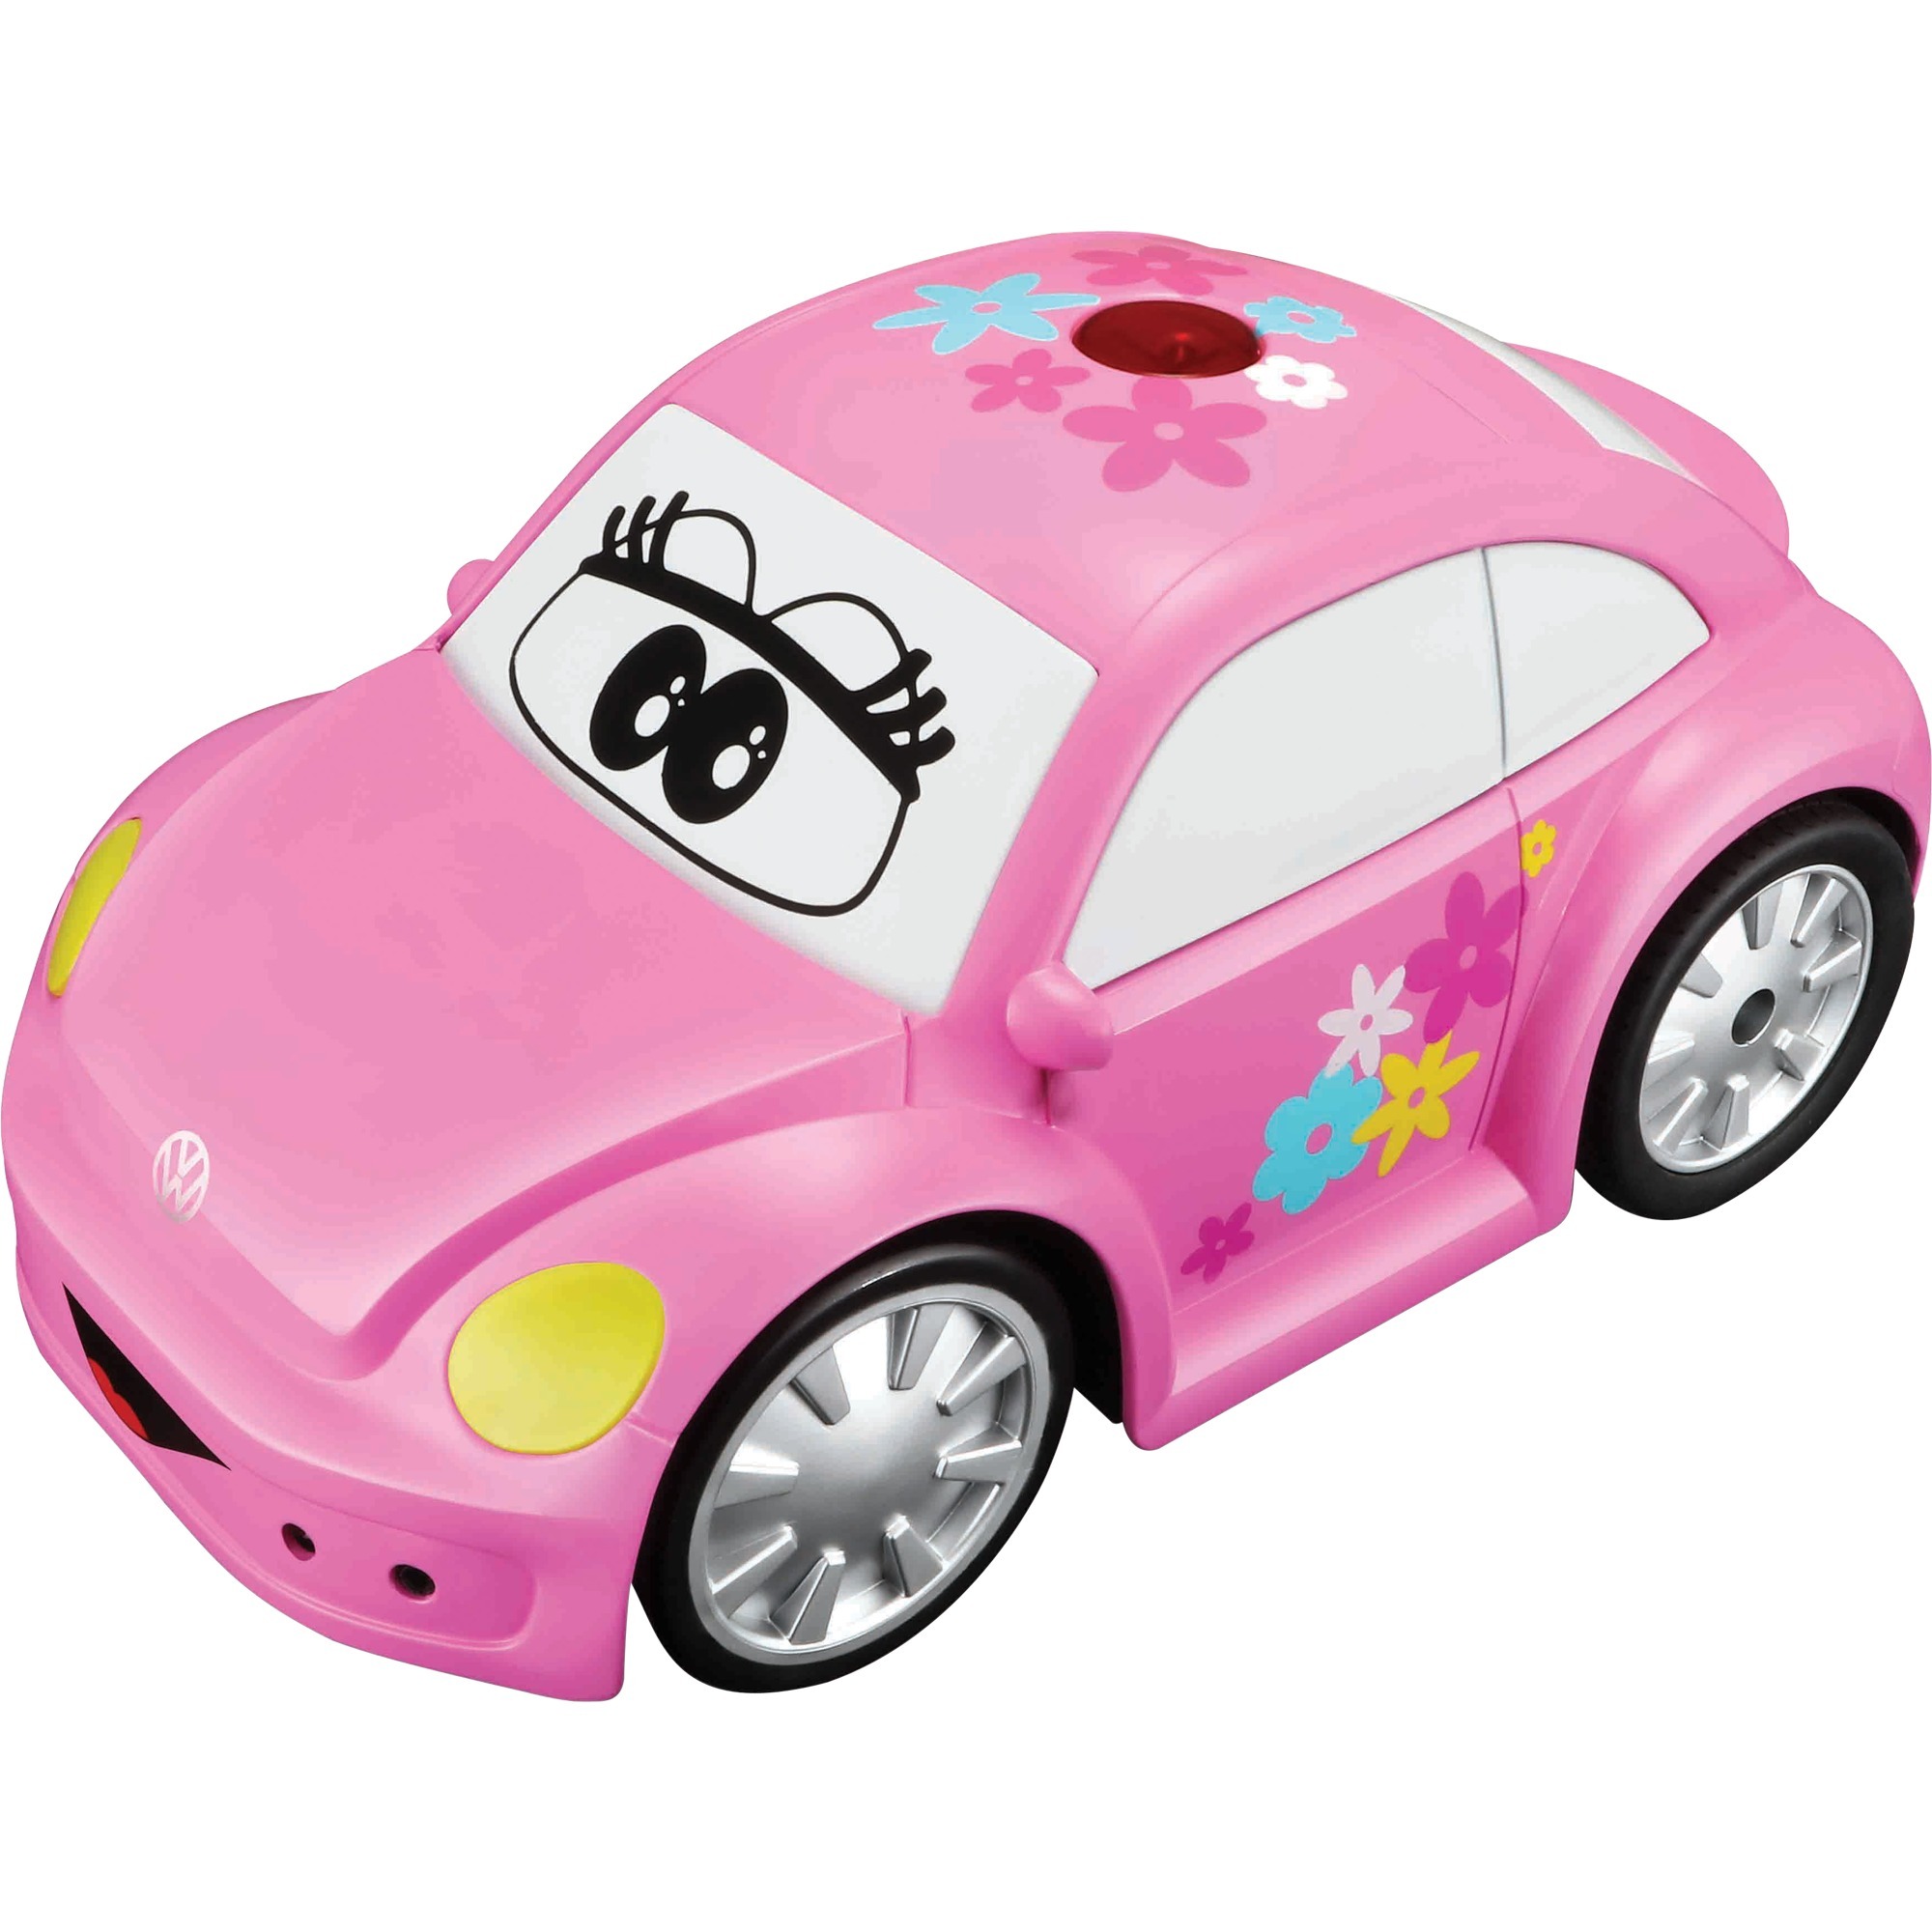 Image of Alternate - BB Junior VW Easy Play RC New Beetle online einkaufen bei Alternate